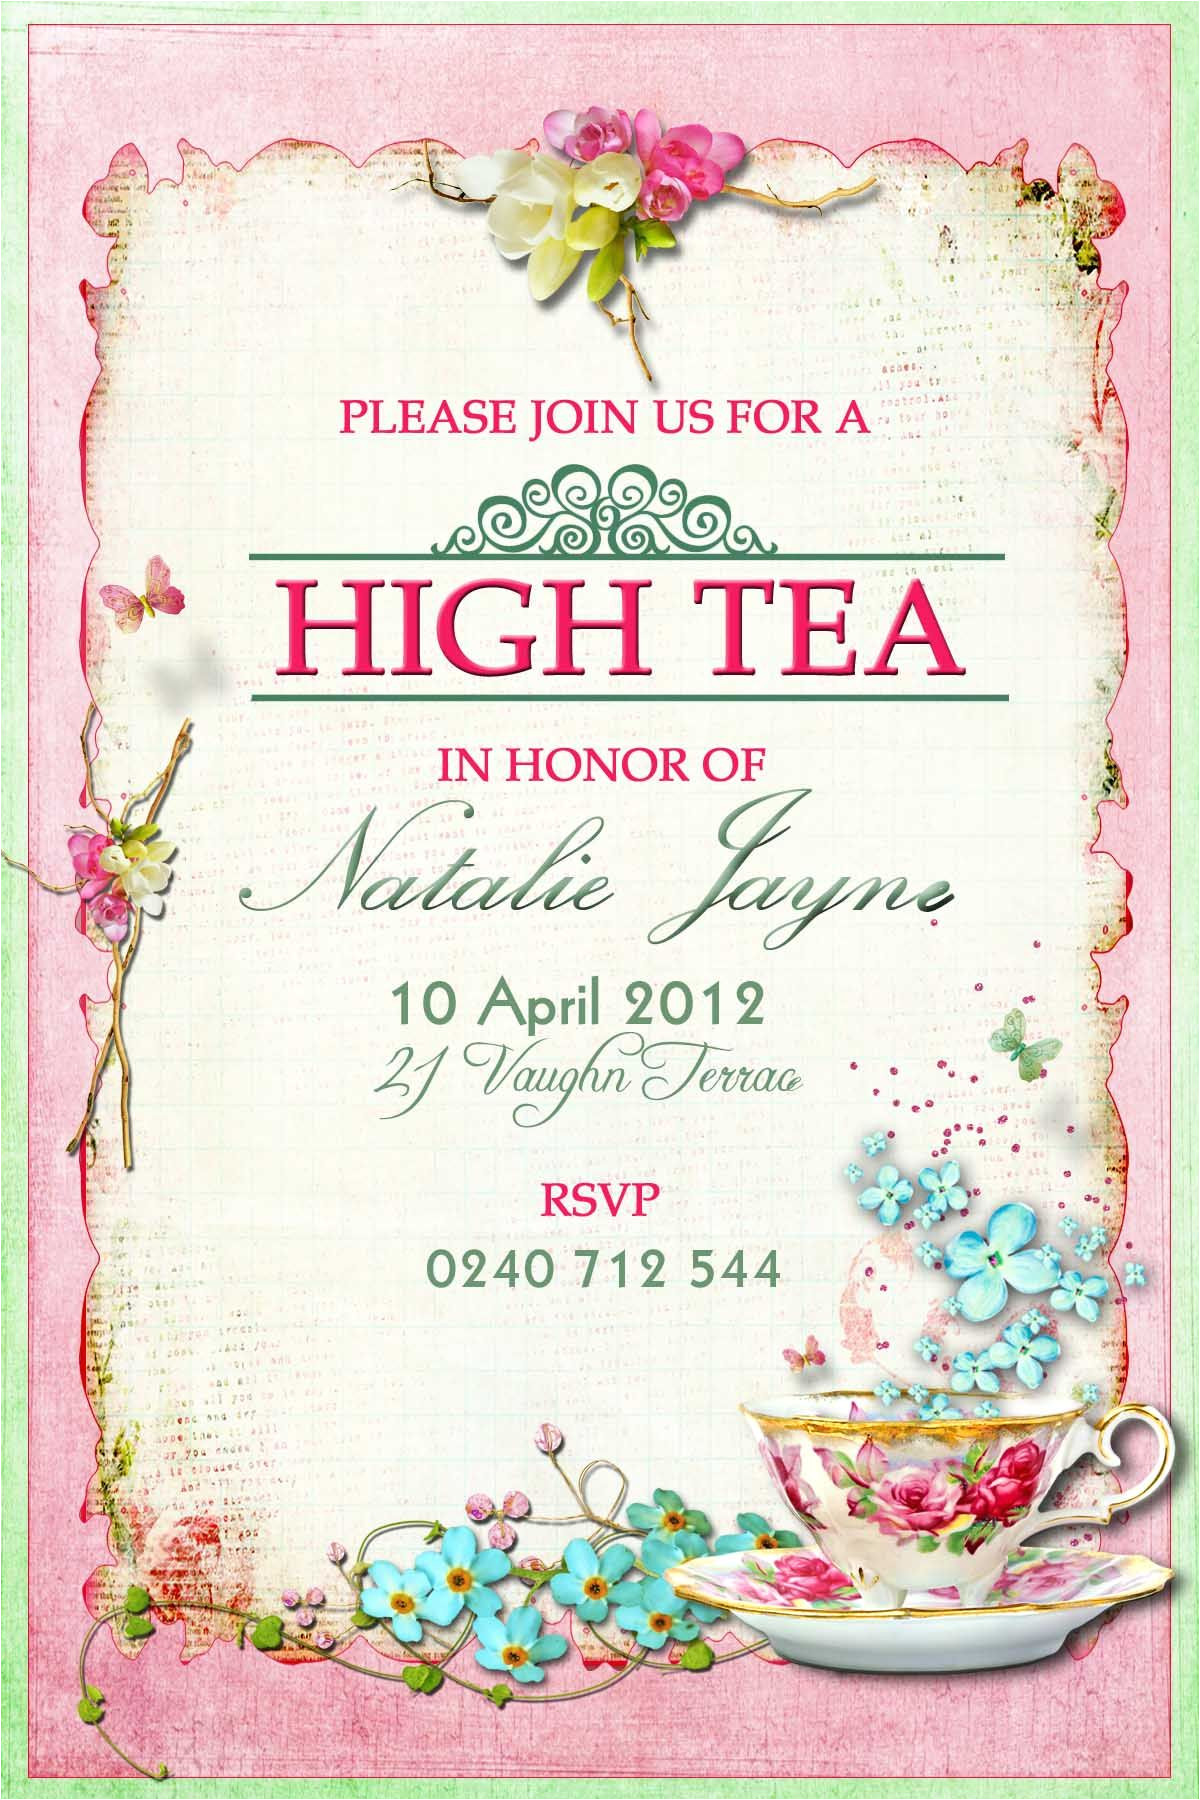 Afternoon Tea Party Invitation Template High Tea Invitation Idea Vegan Tea Time In 2019 High